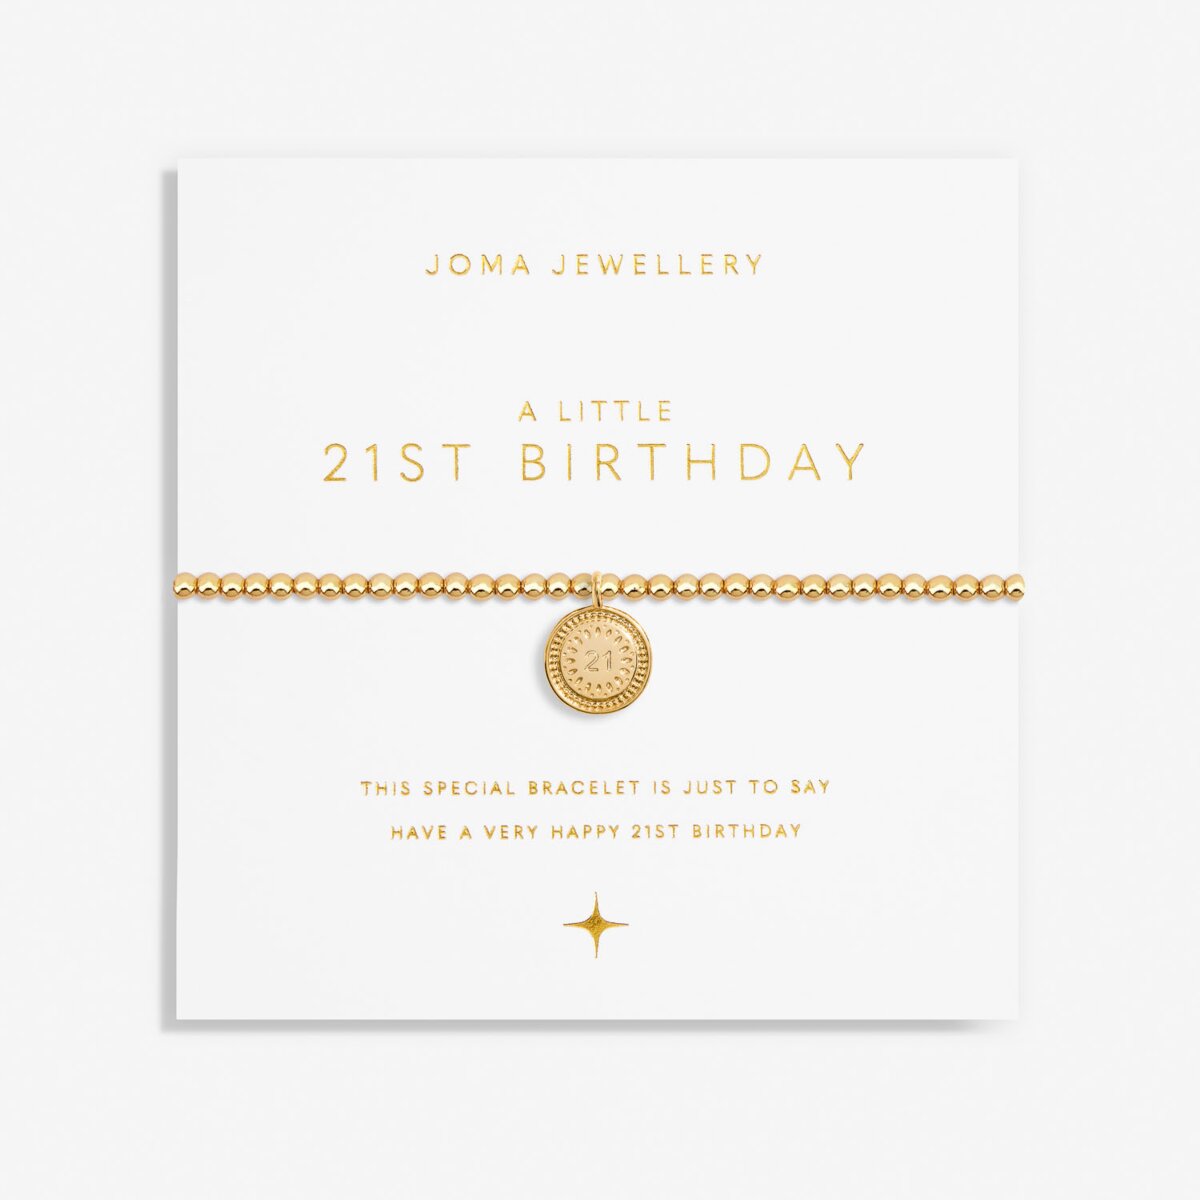 JOMA JEWELLERY | A LITTLE GOLD | 21ST BIRTHDAY BRACELET